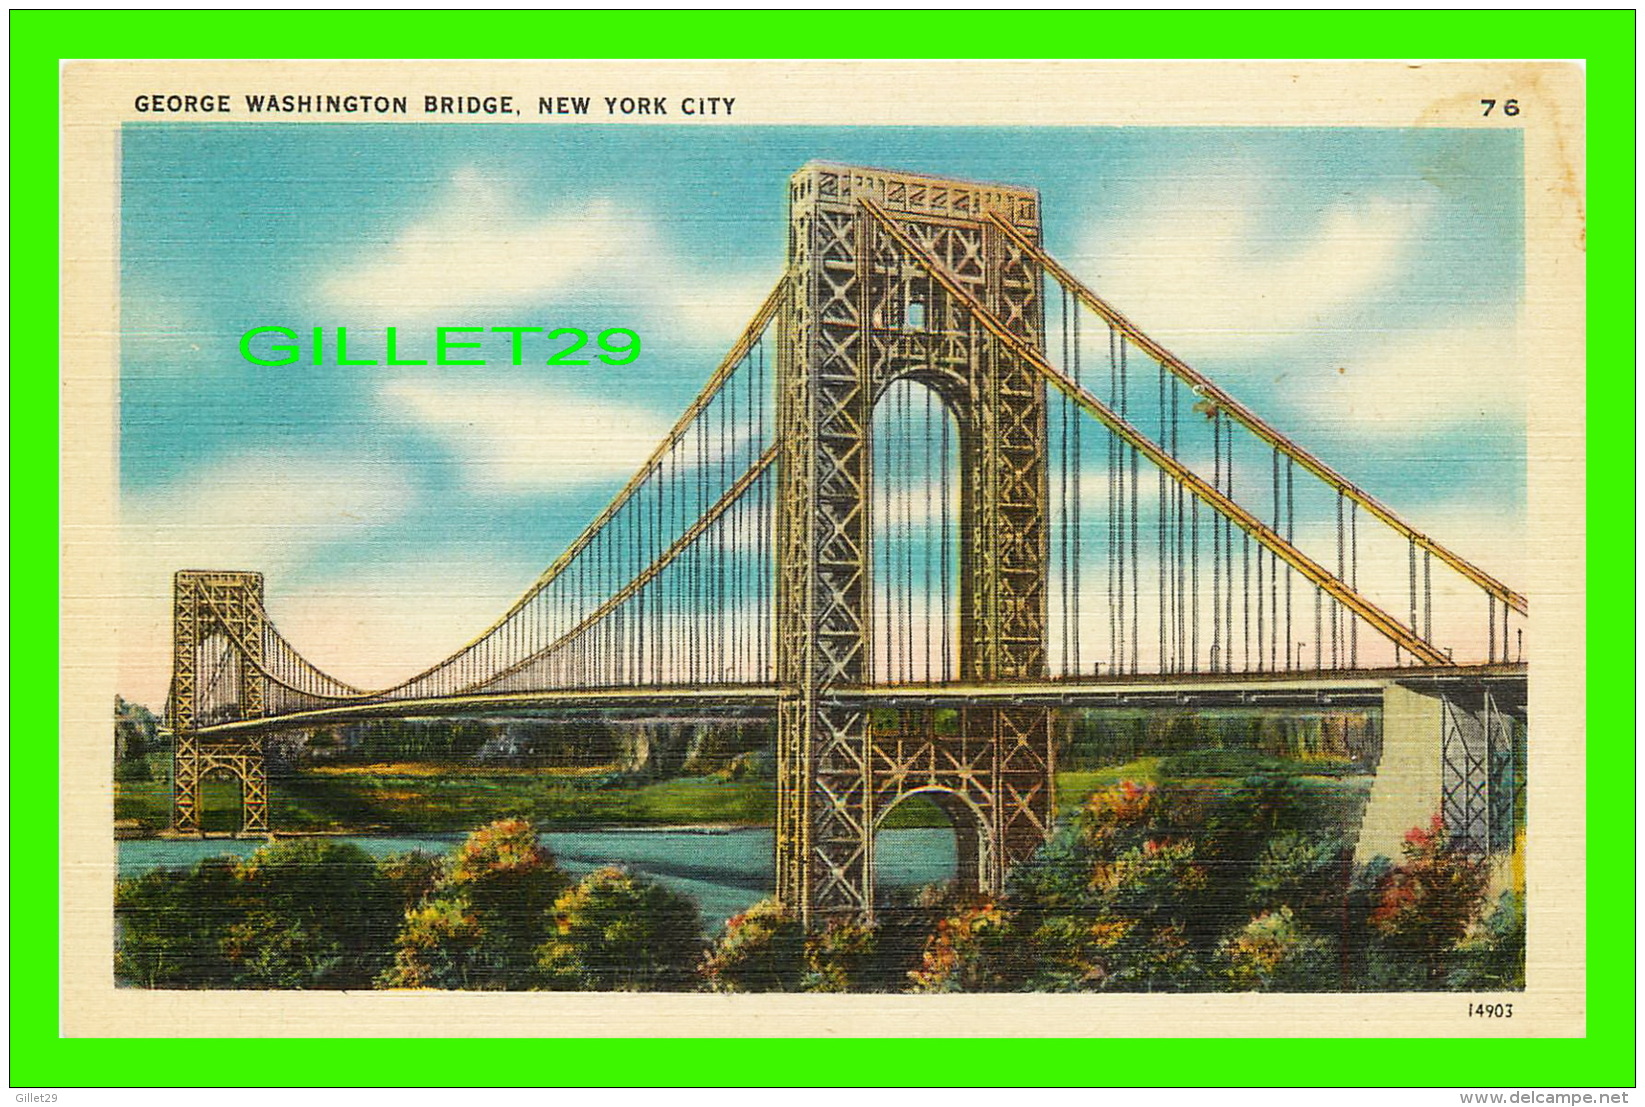 NEW YORK CITY, NY - GEORGE WASHINGTON BRIDGE -  ALFRED MAINZER - - Puentes Y Túneles